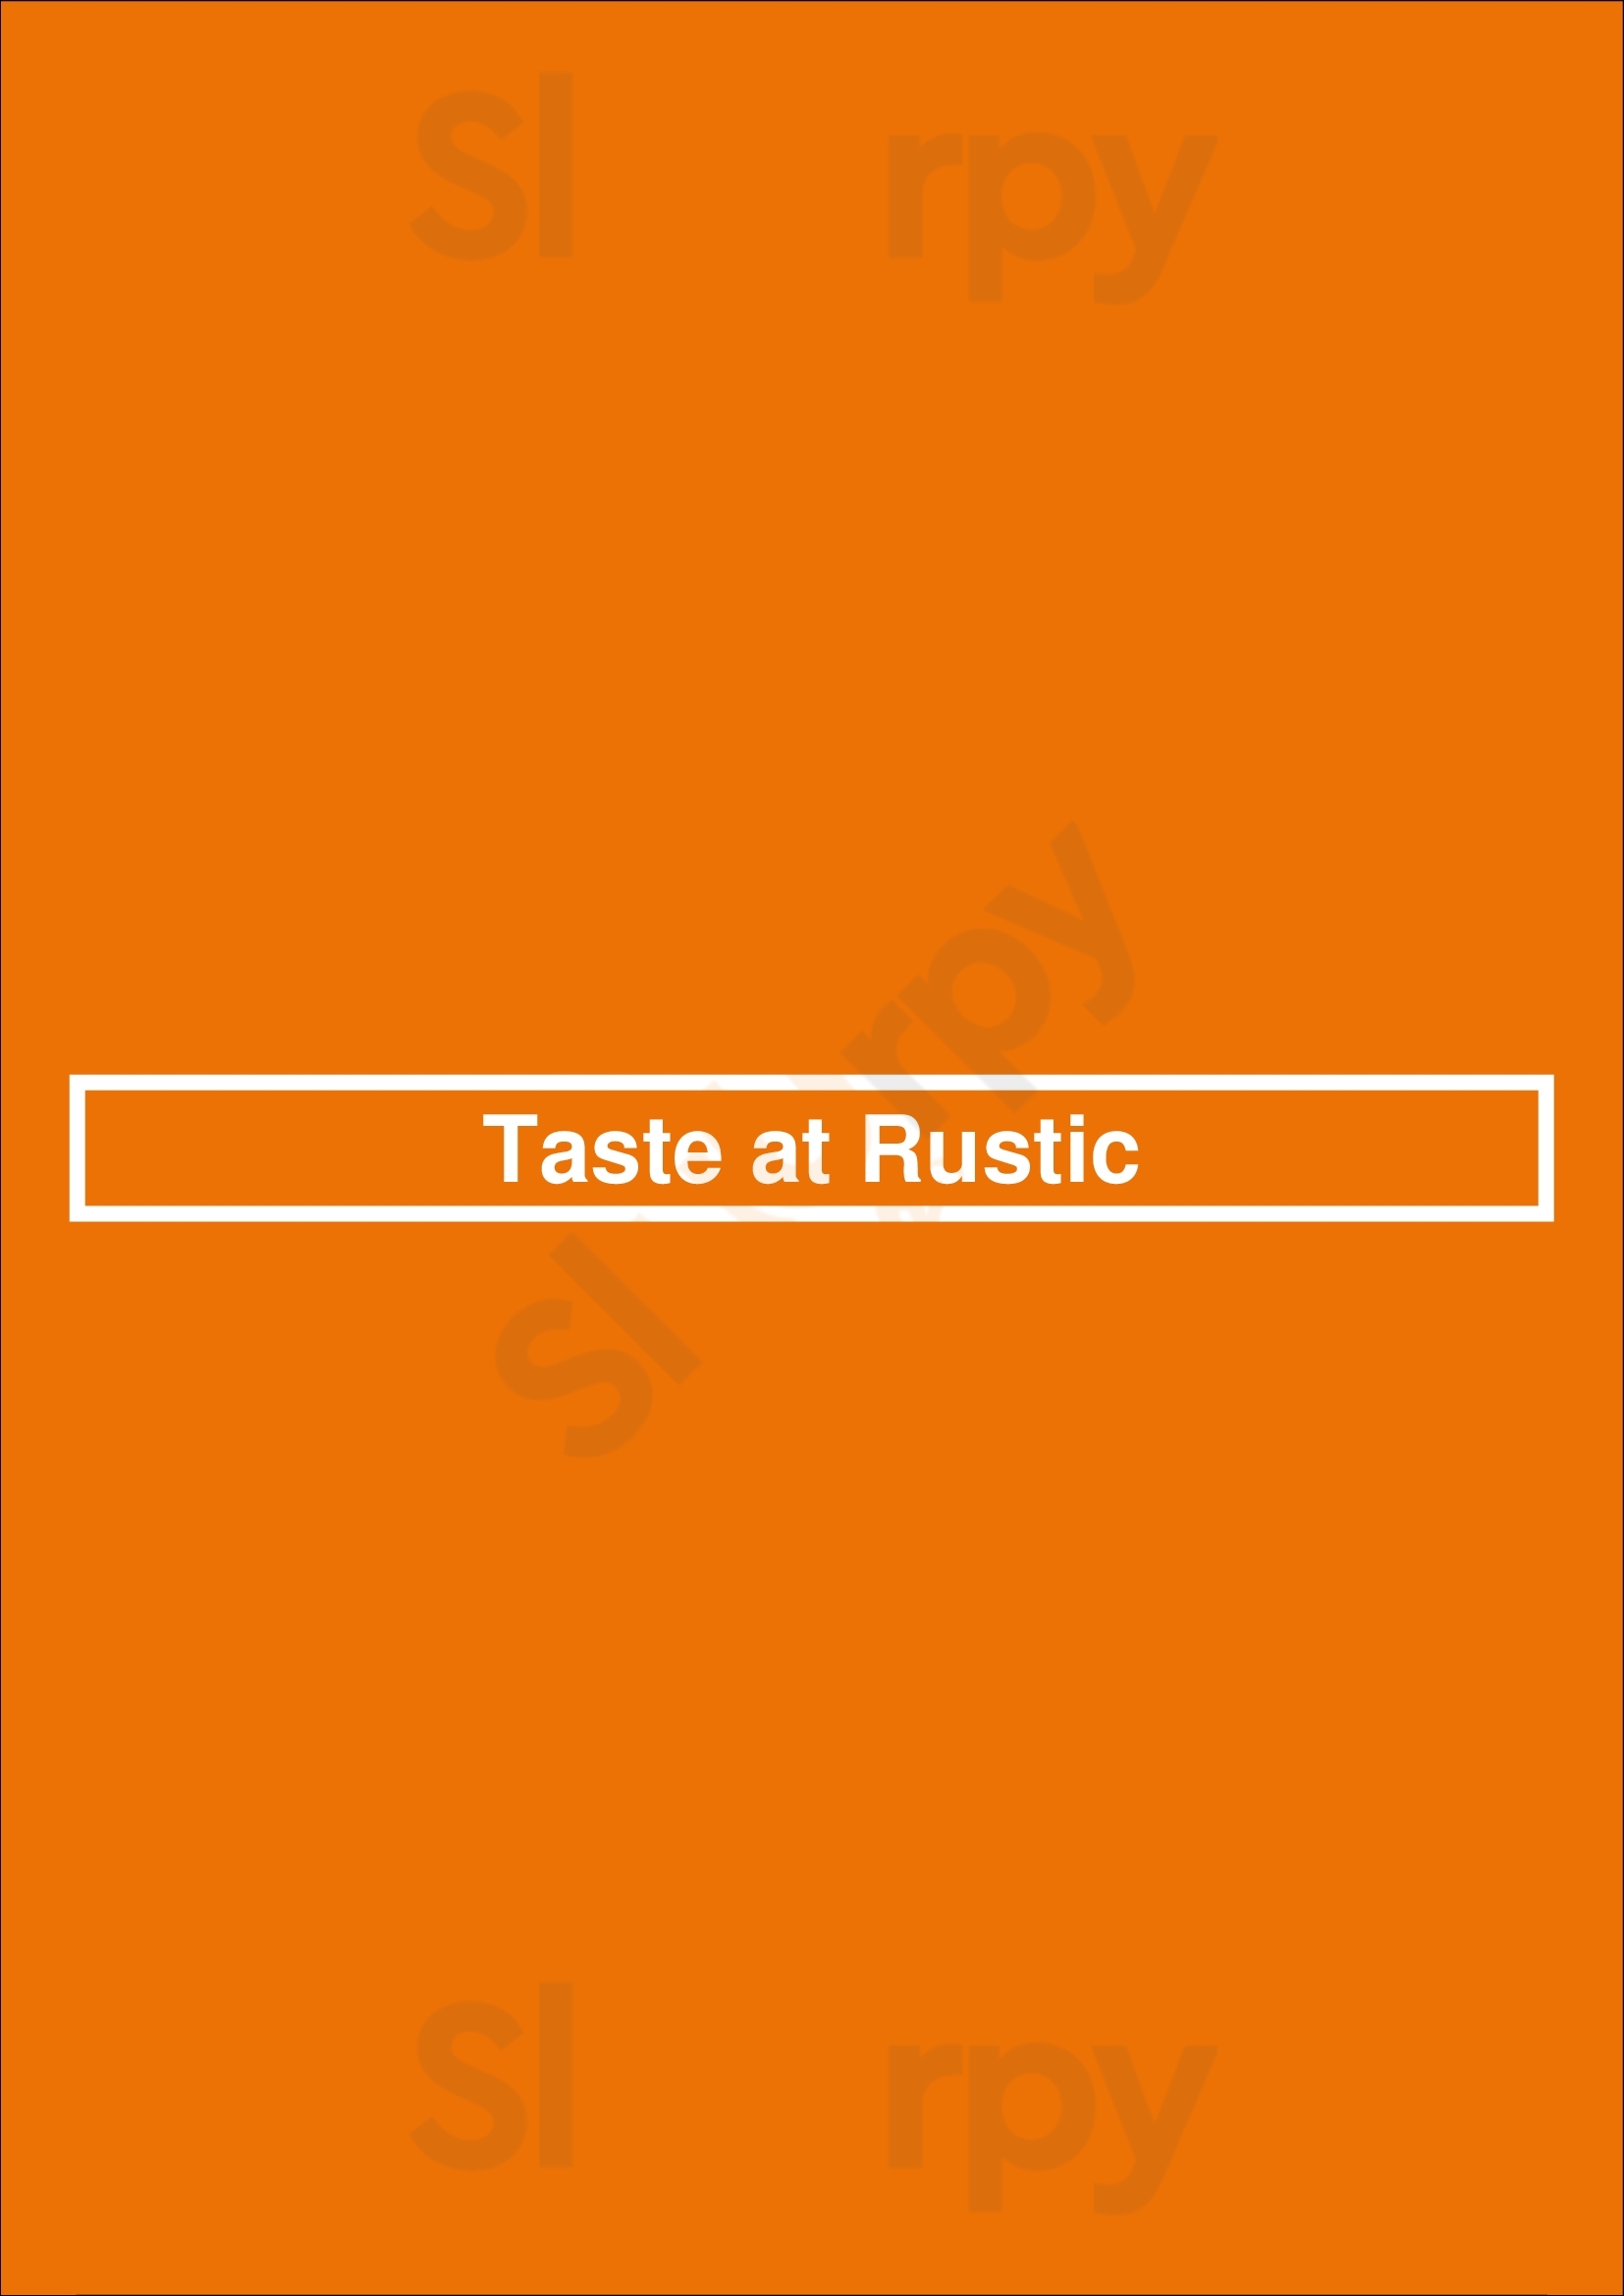 Taste At Rustic Dublin Menu - 1